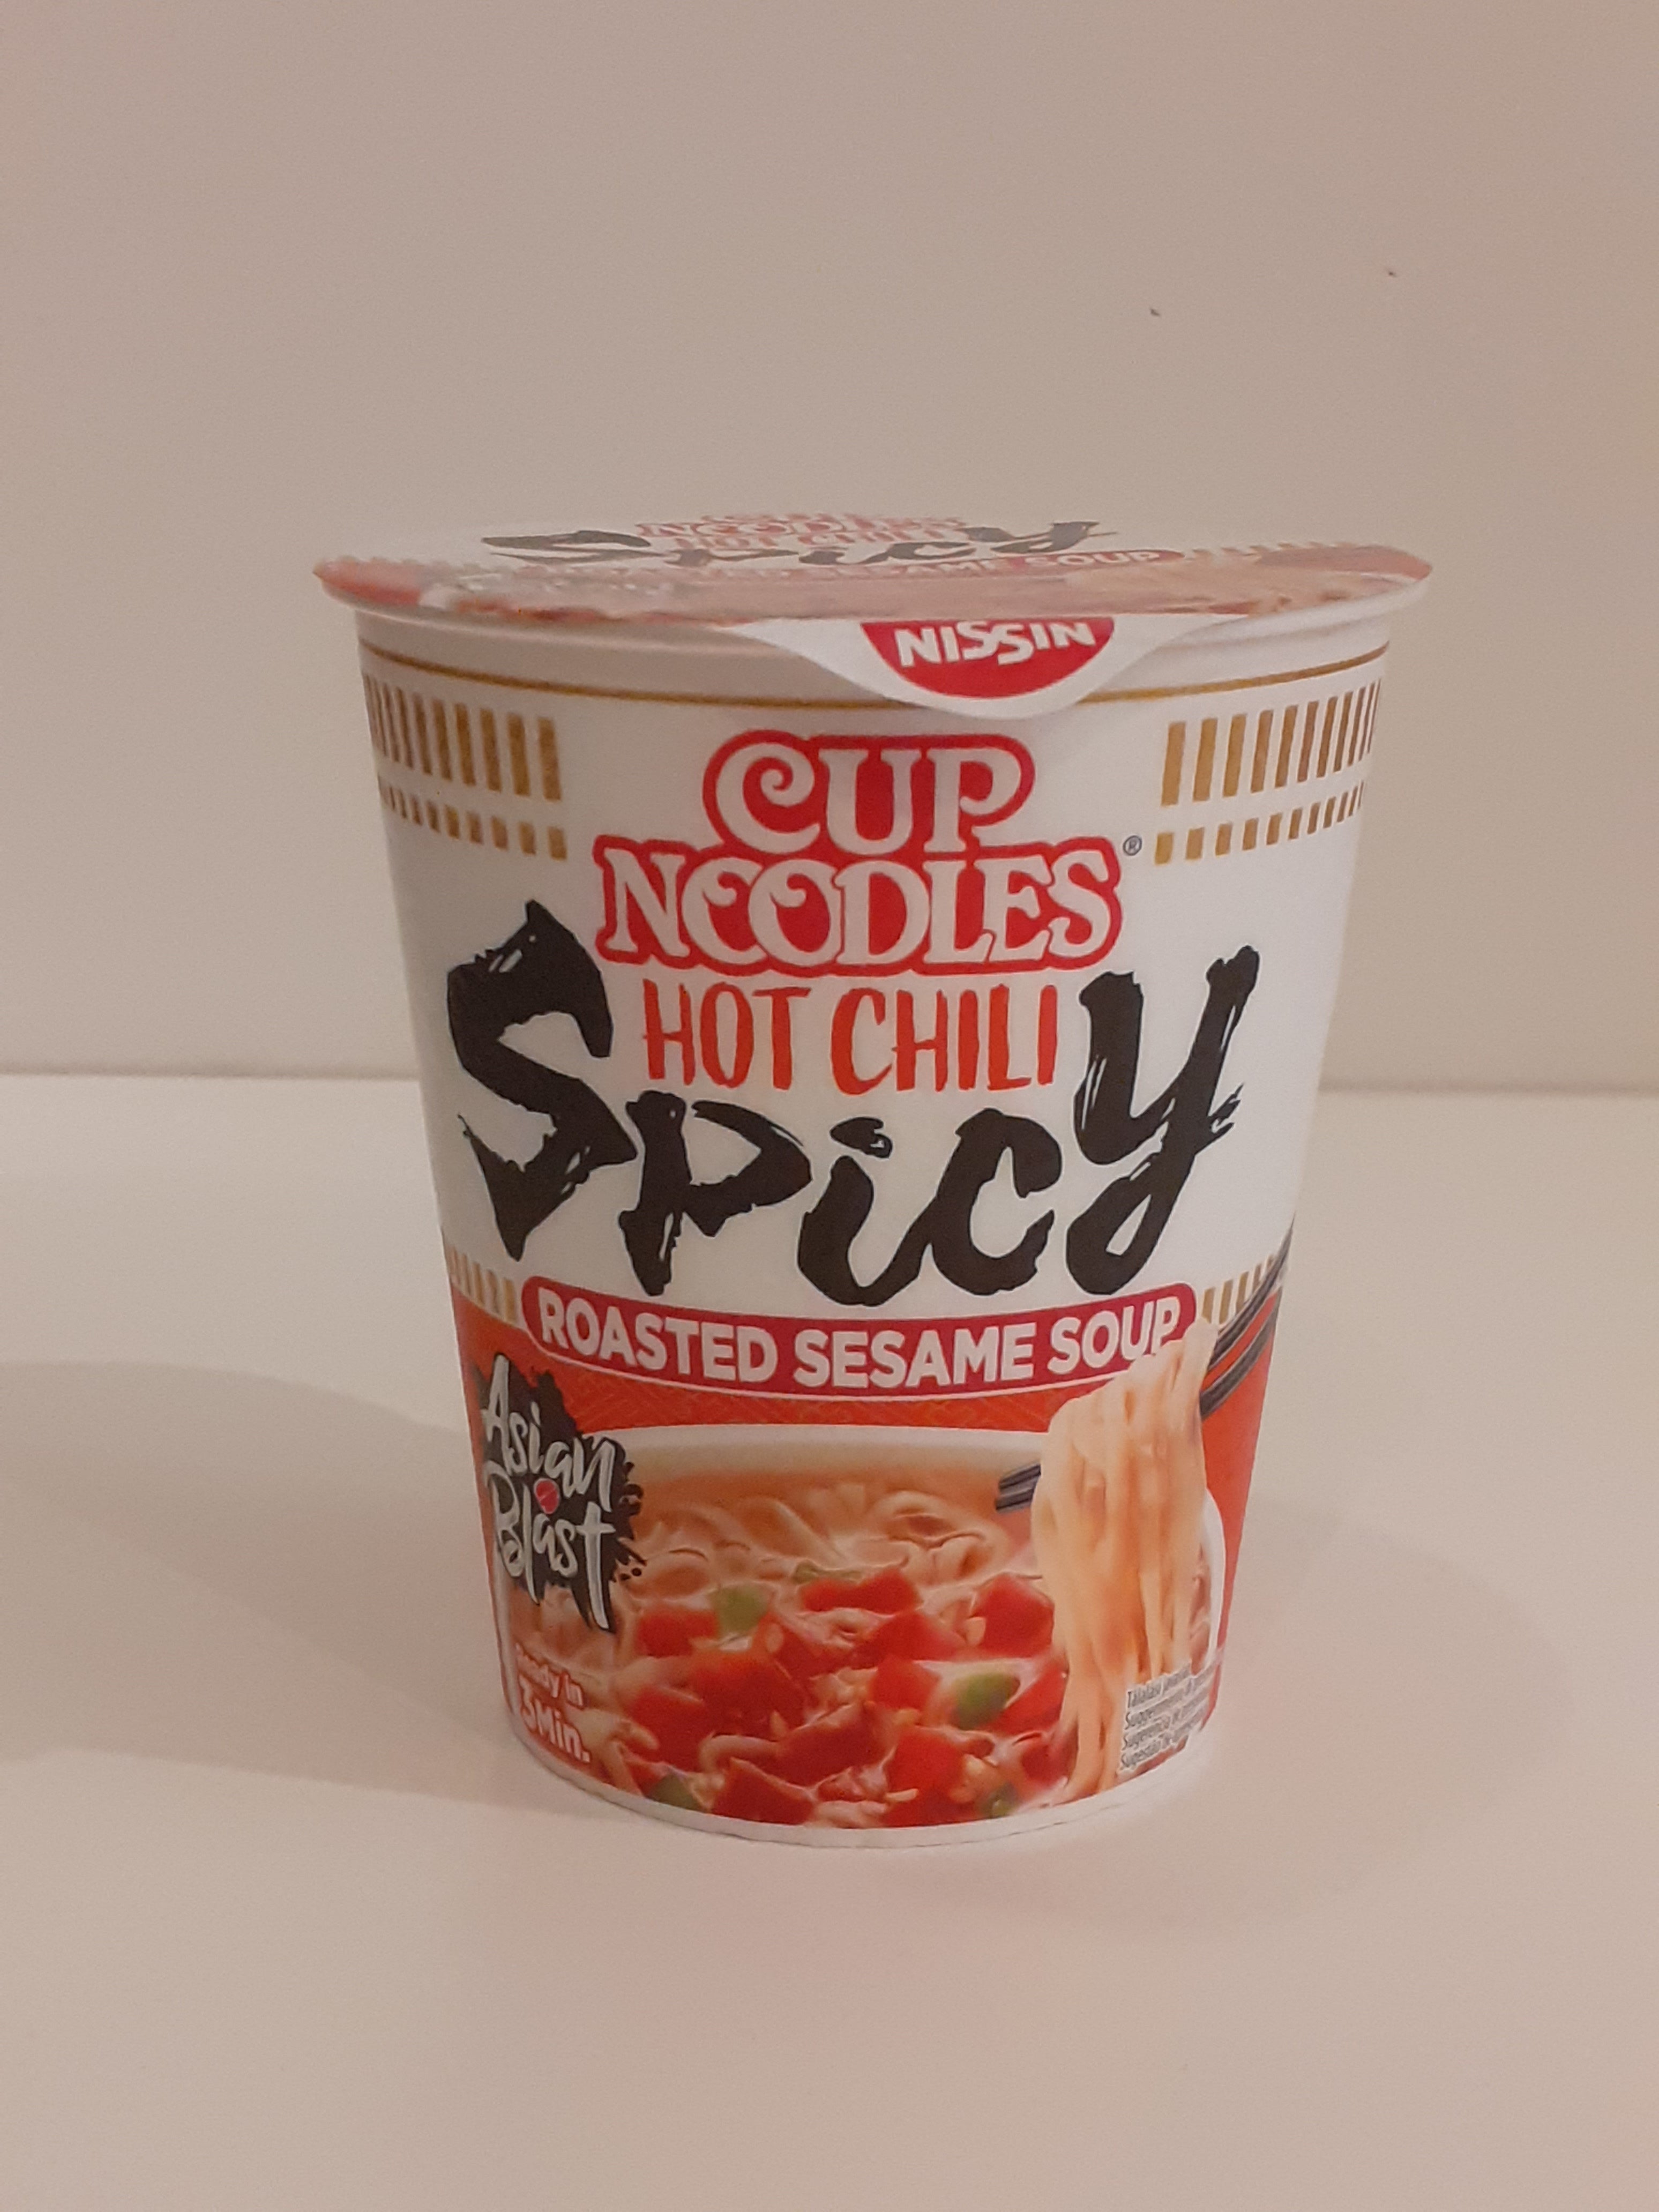 Noodles "Spicy"